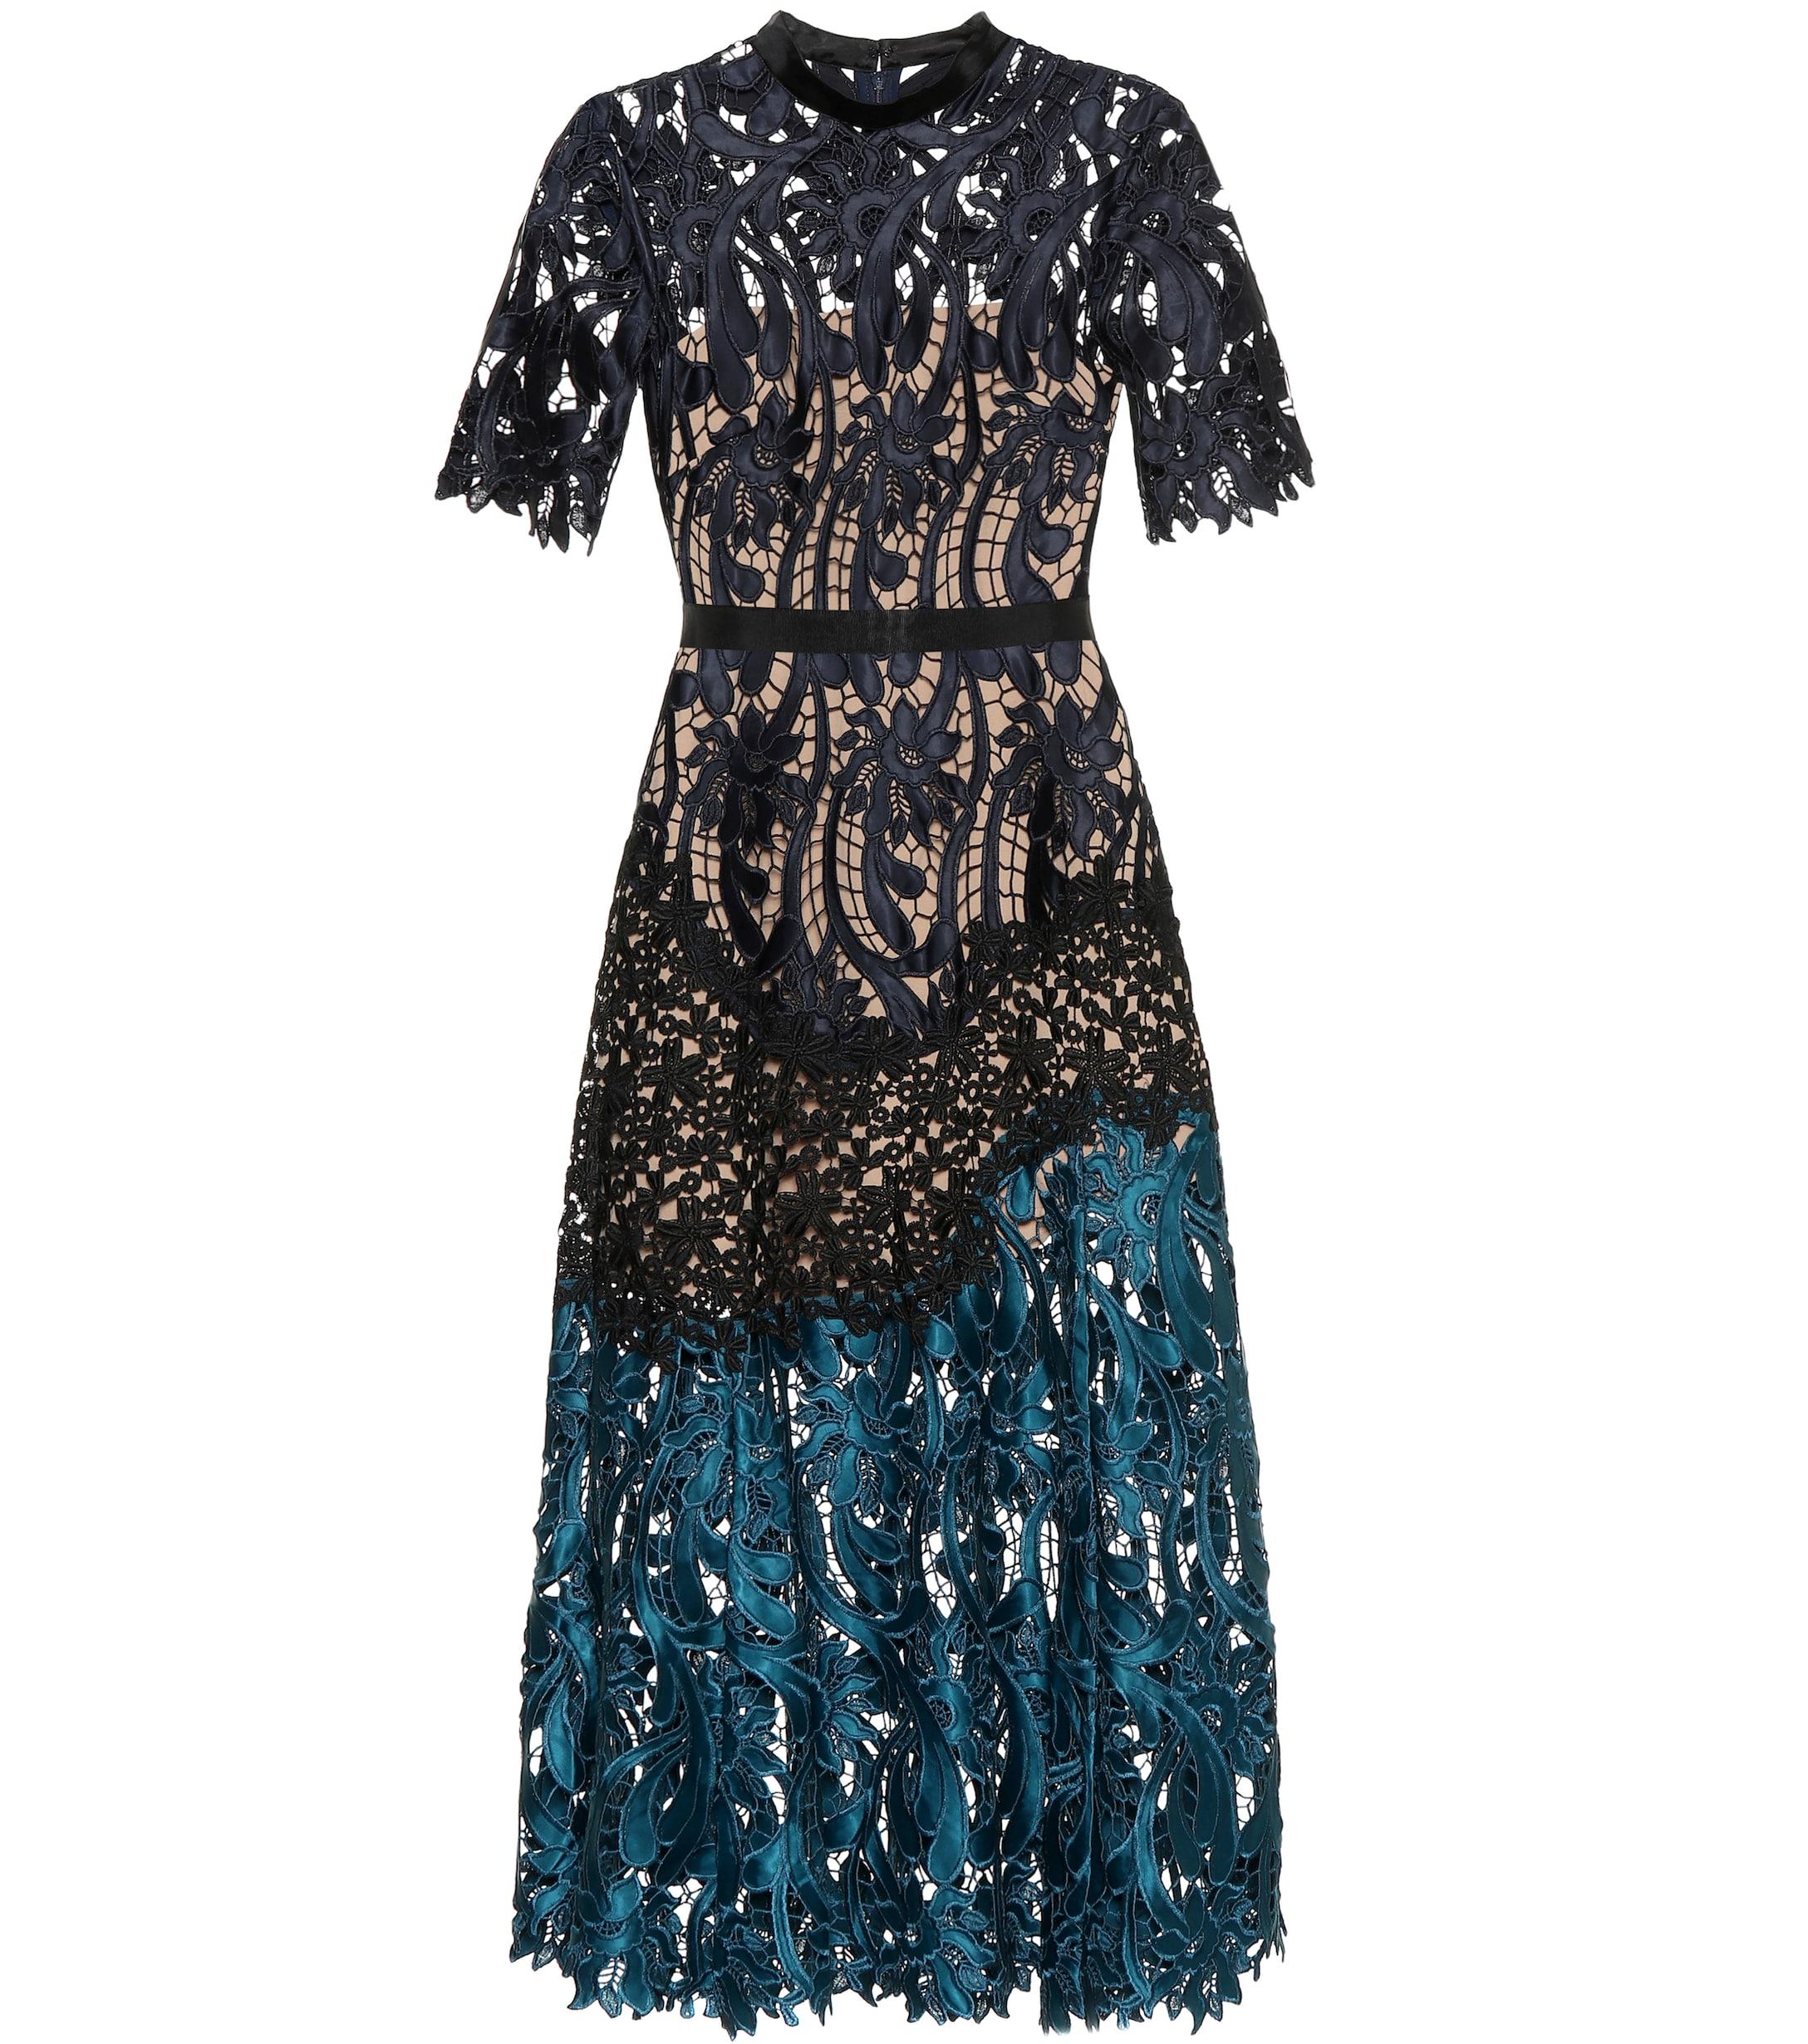 Self-Portrait Prairie Guipure Lace Midi Dress in Beige/Black/Floral ...